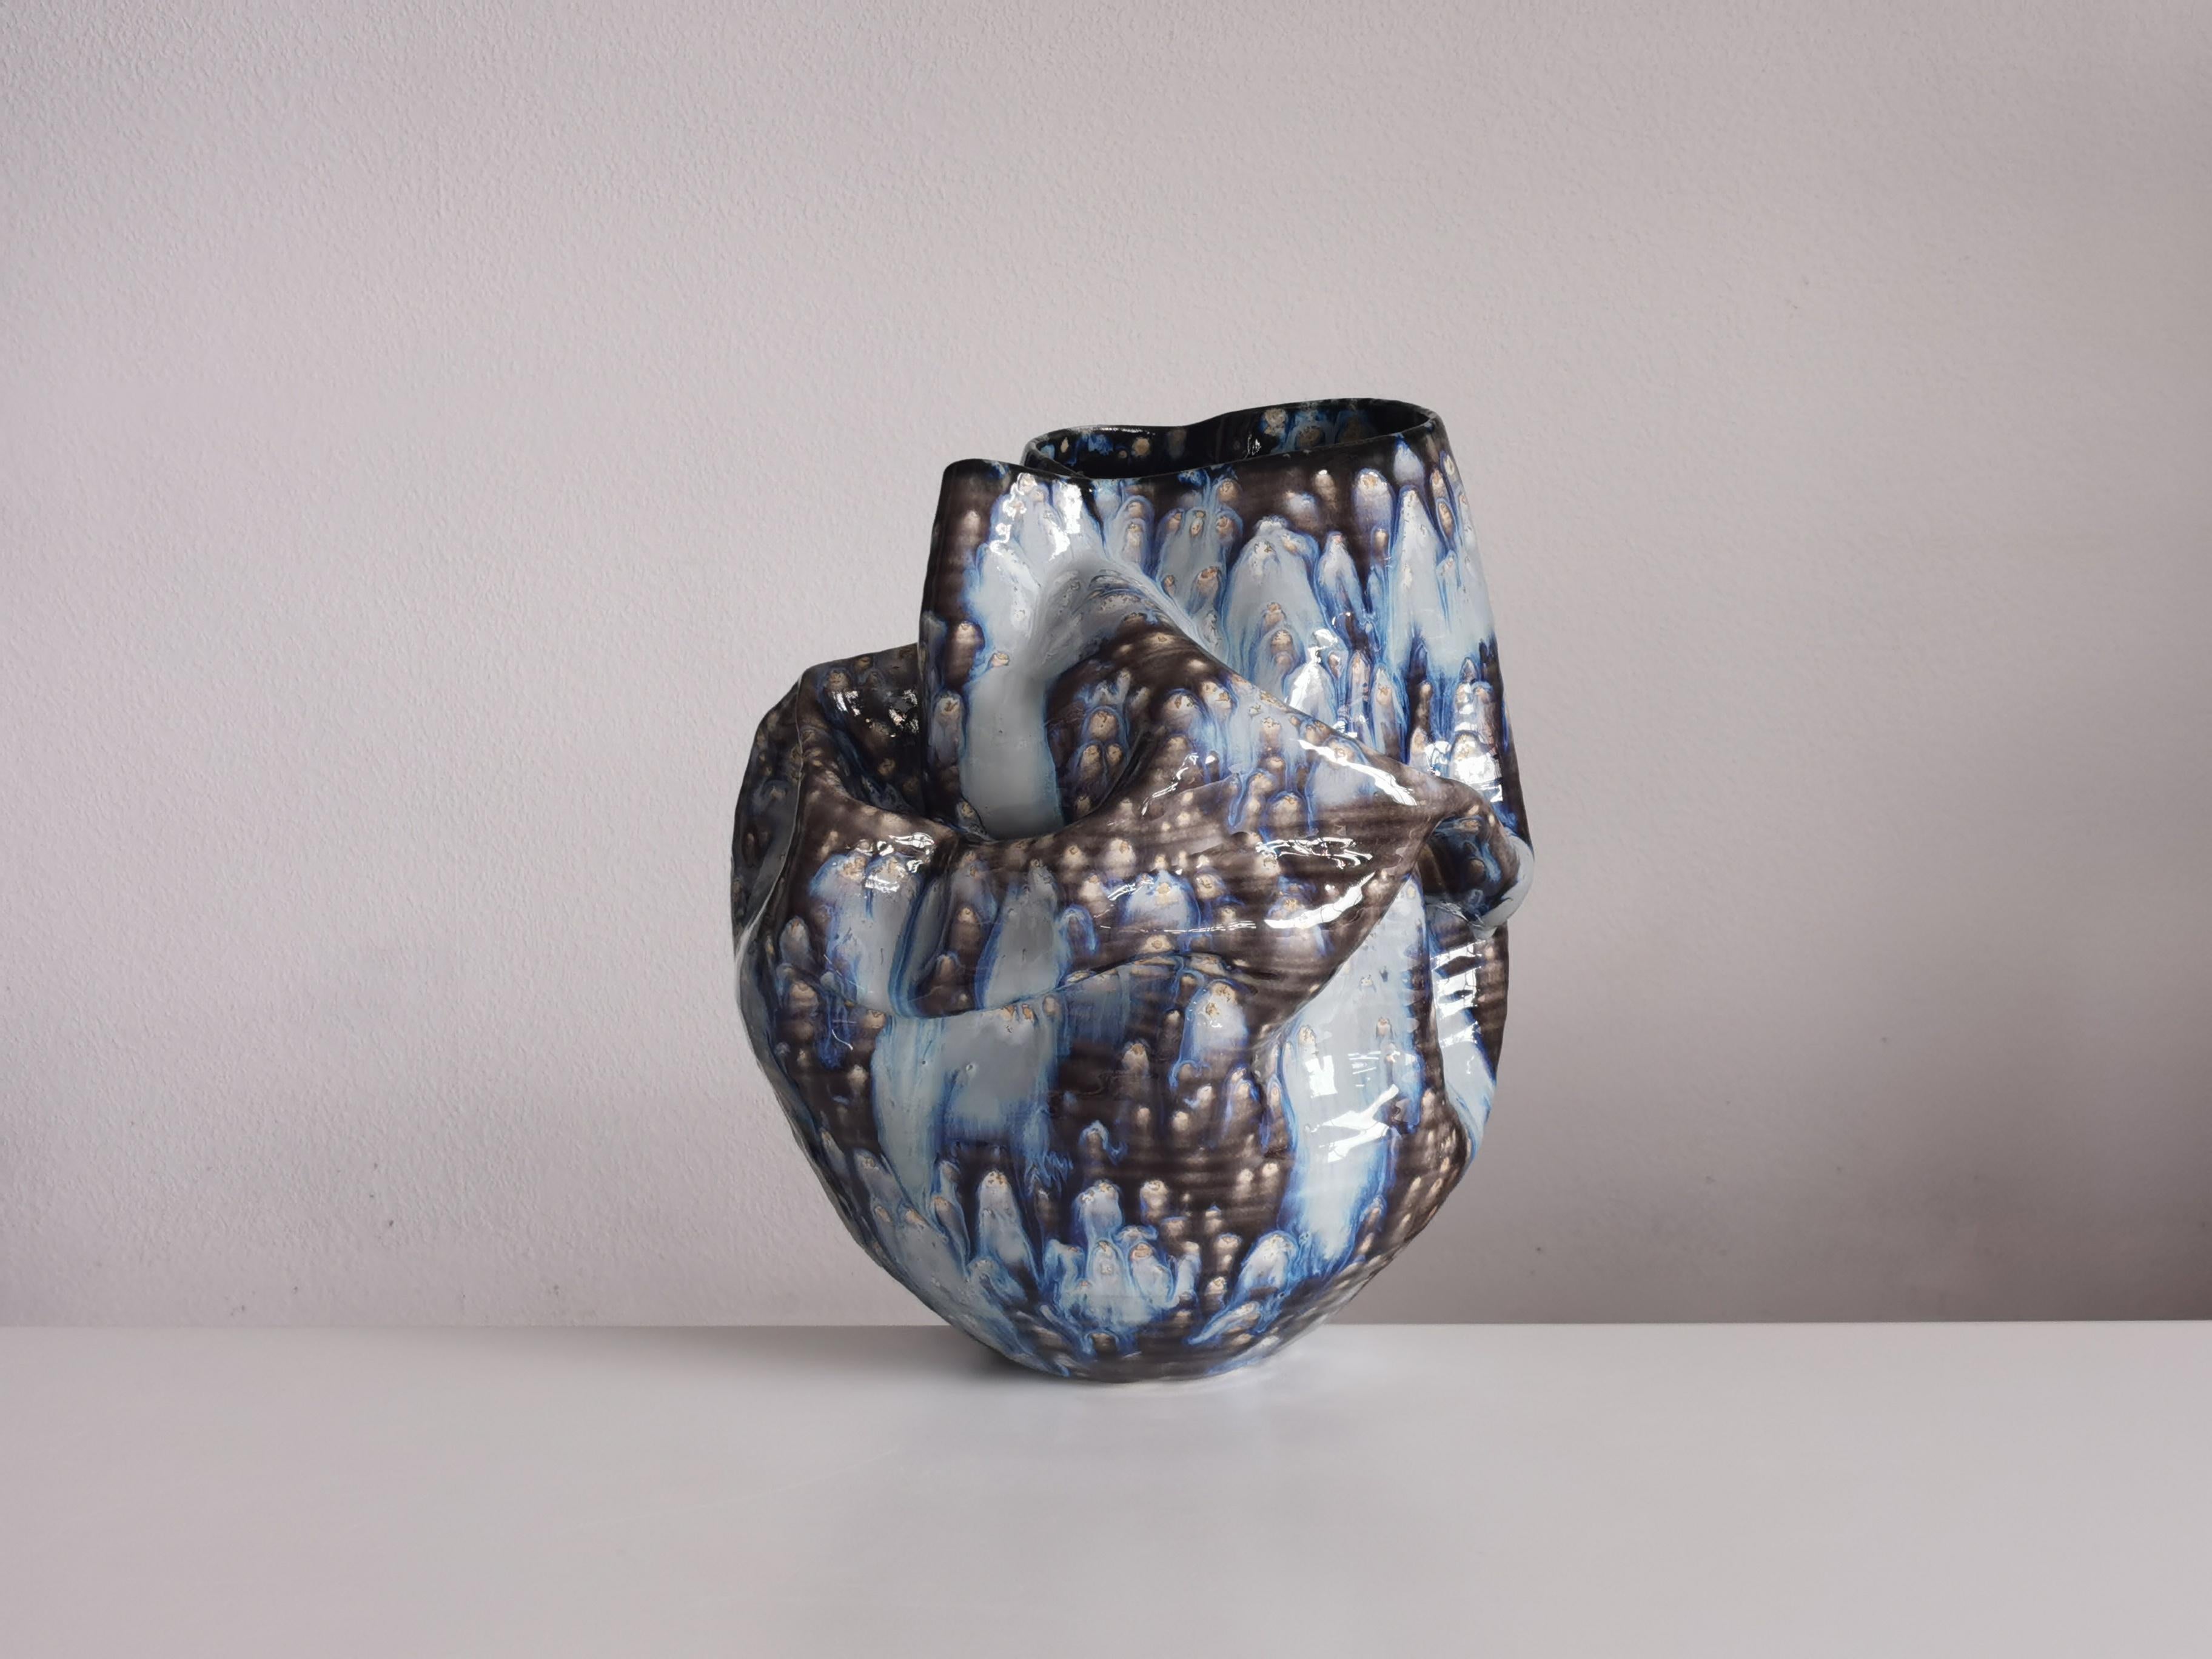 Organic Modern Medium Undulating Form Galaxy Blue Glaze, Unique Ceramic Sculpture Vessel N.78